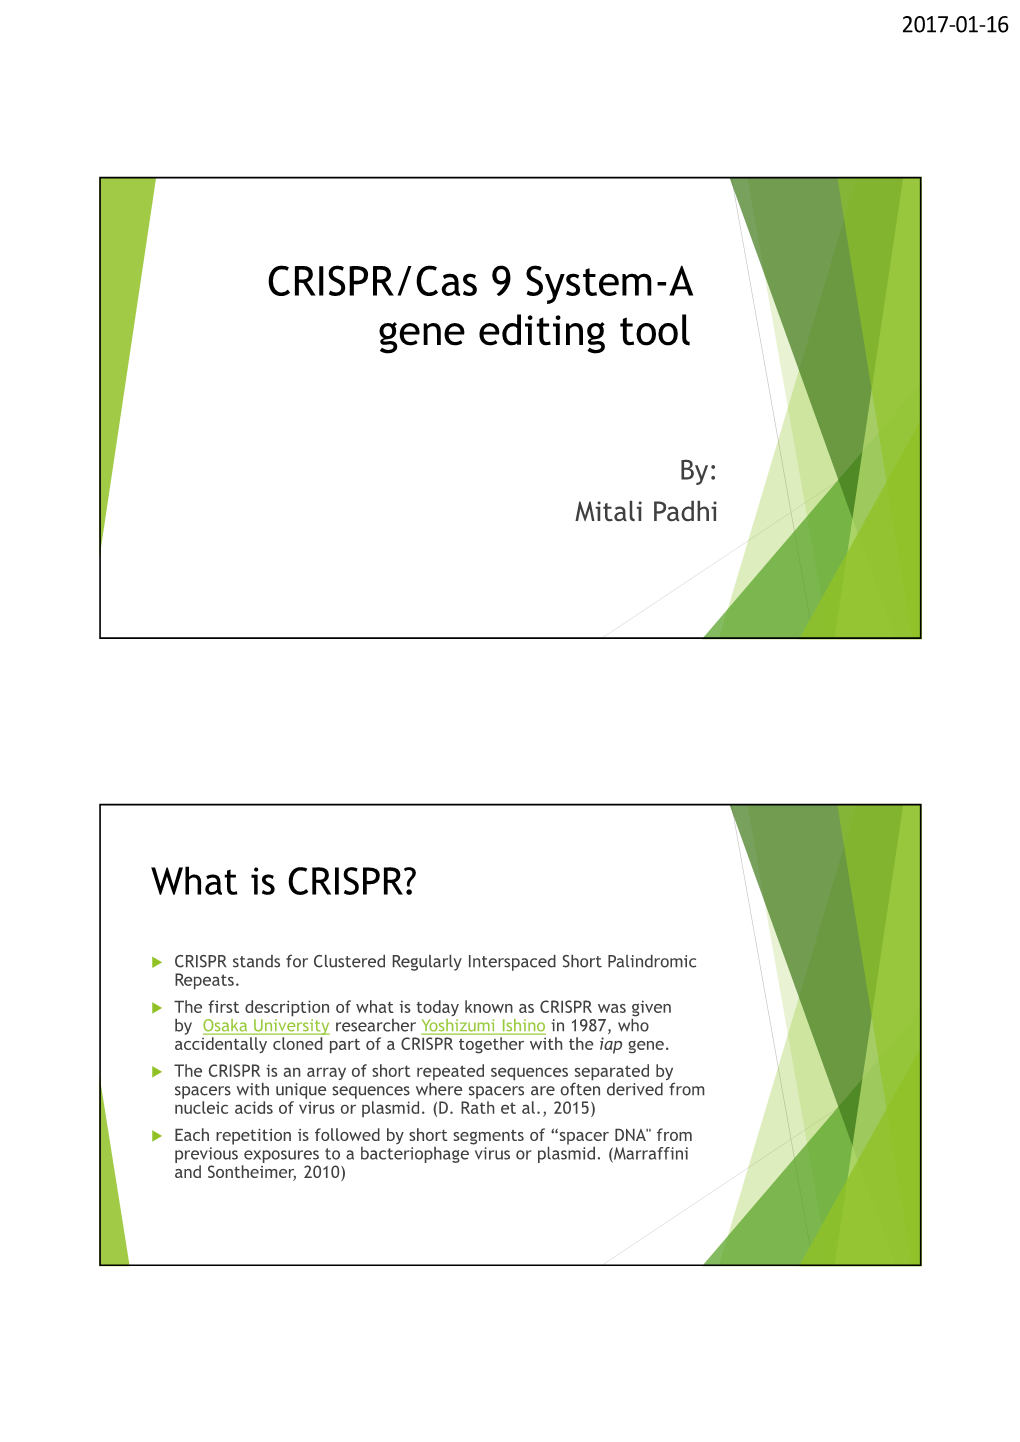 CRISPR/Cas 9 System-A Gene Editing Tool